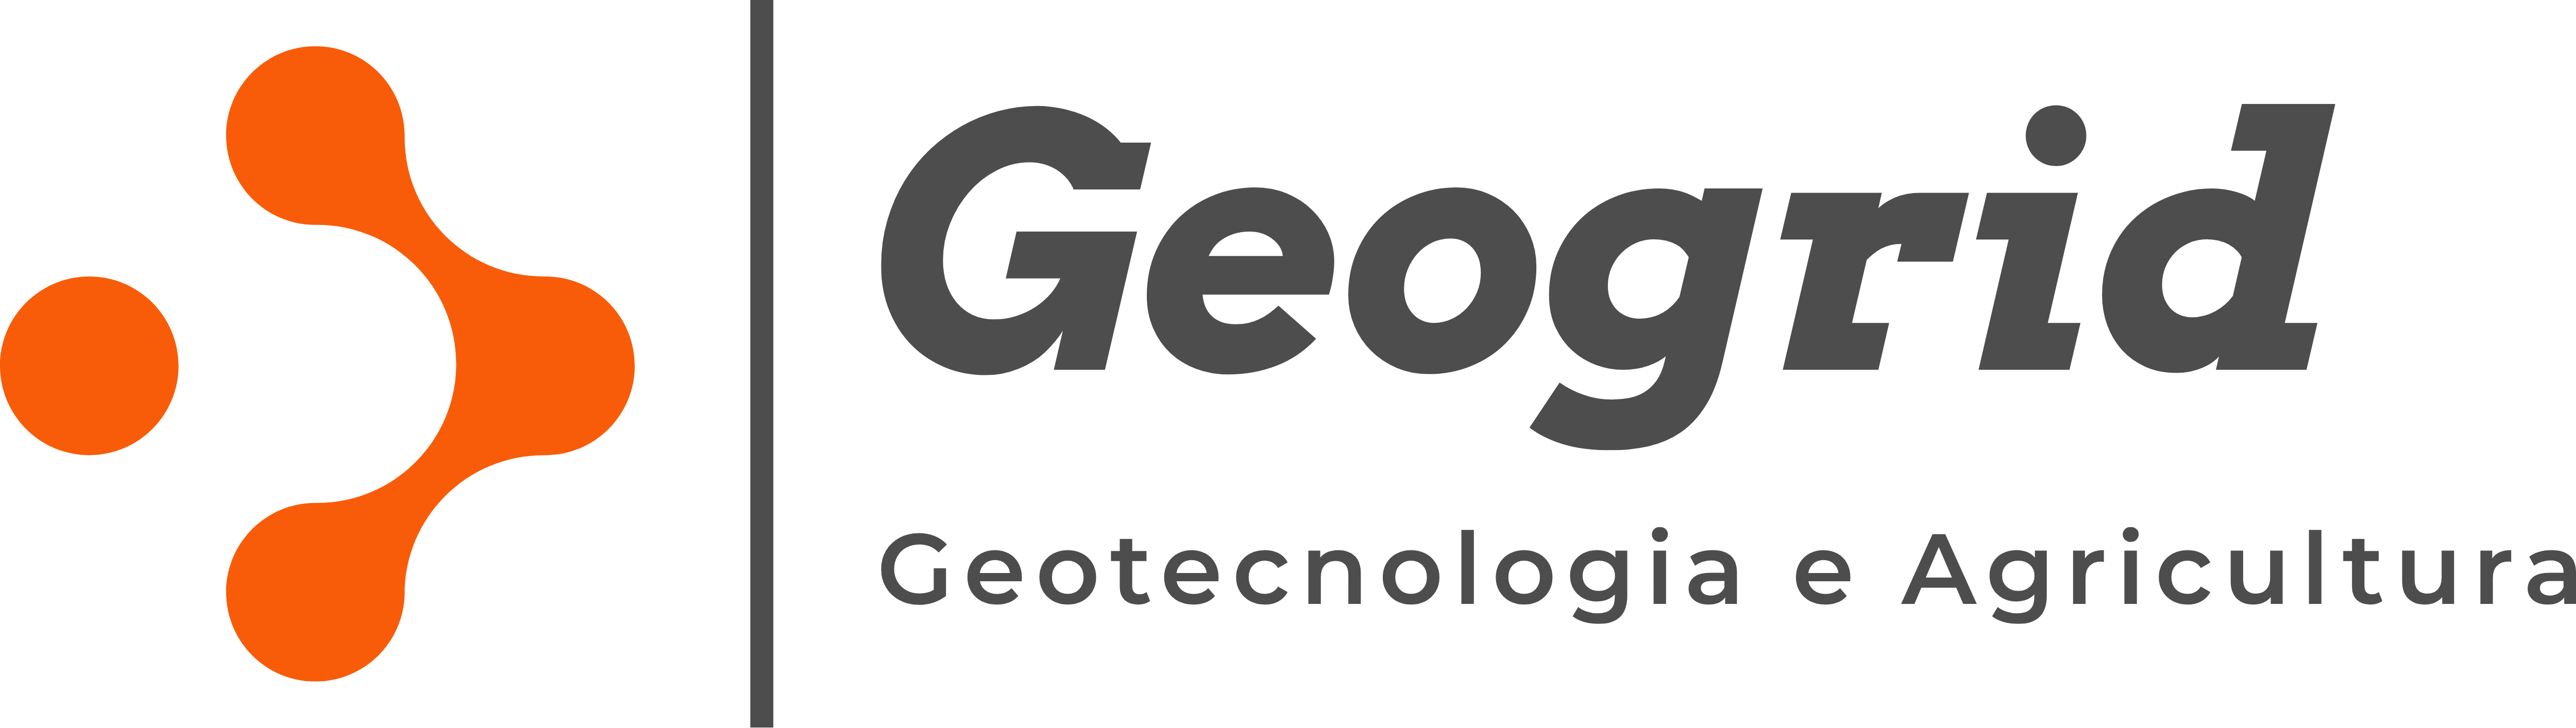 Geogrid - Geotecnologia